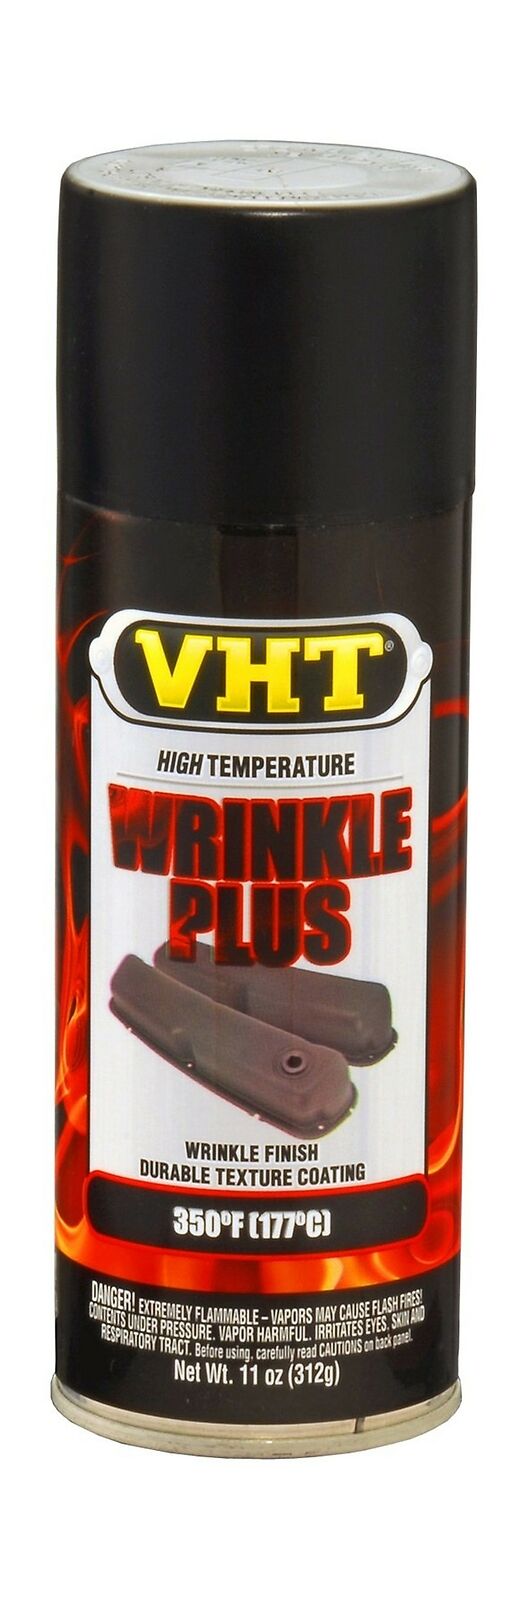 VHT Wrinkle Plus High Heat Coating Black SP201 Spray Can